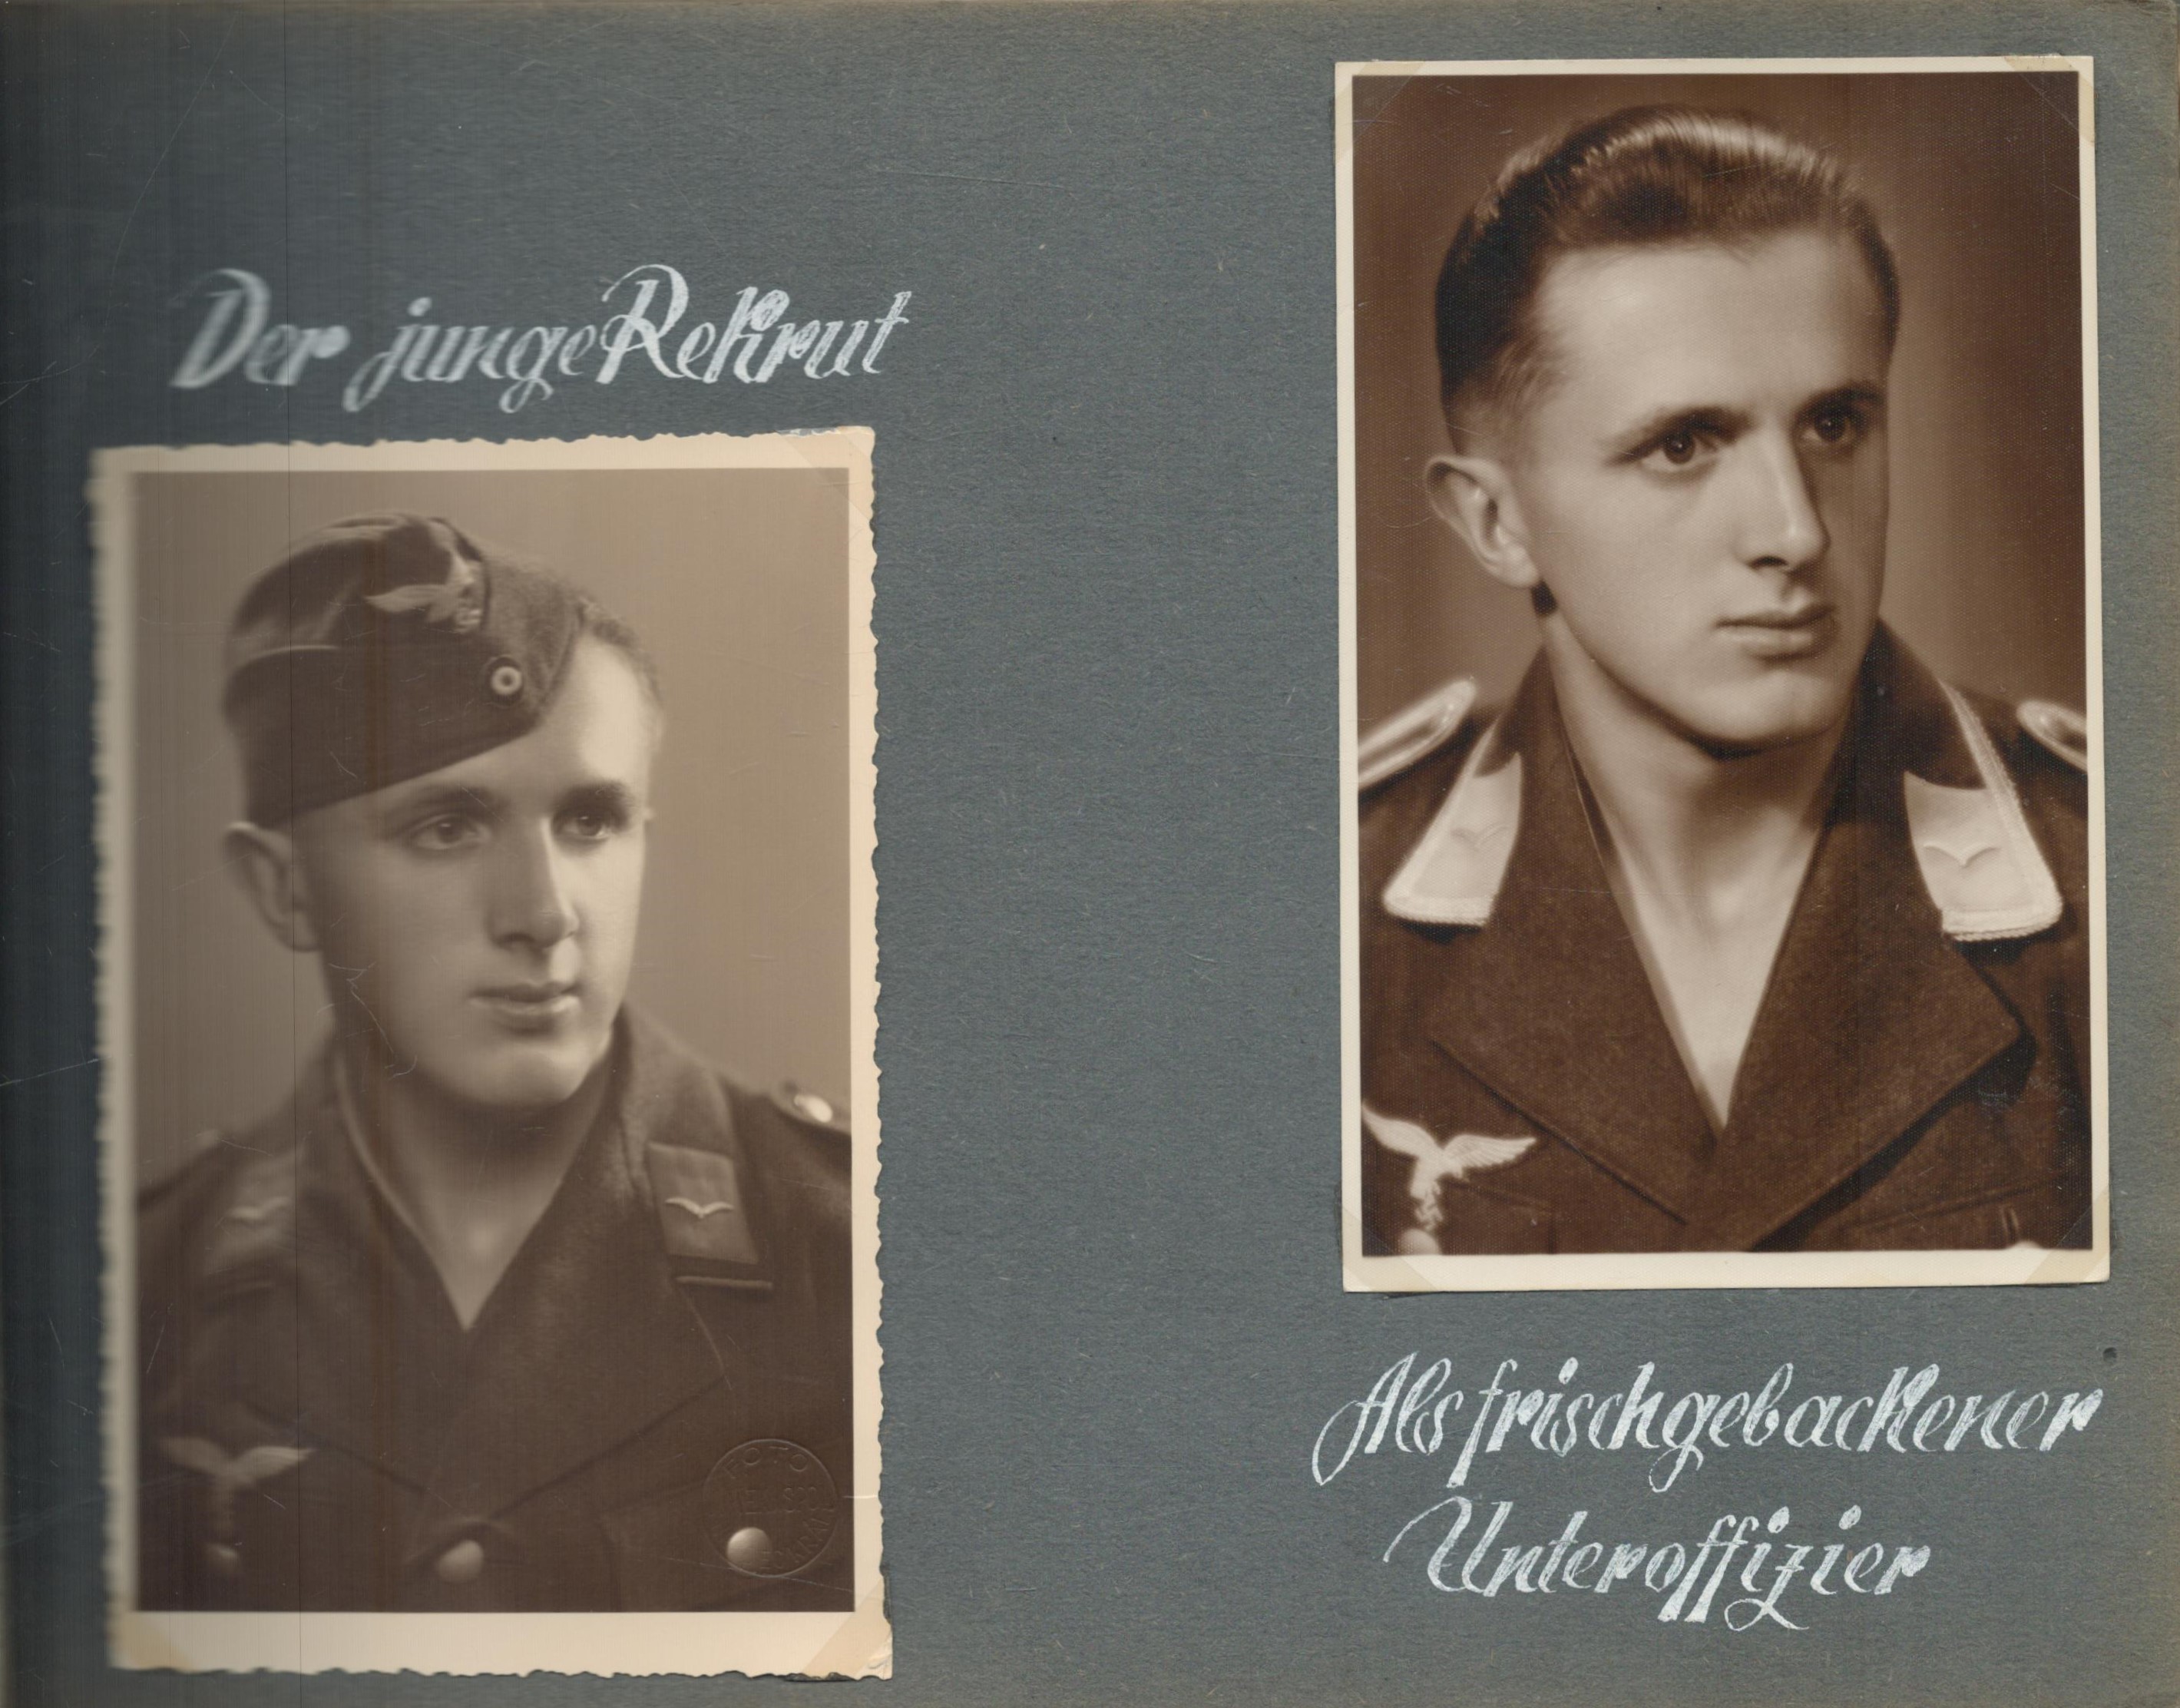 Luftwaffe Stuka Operator photo album of the career and war memories of Erich Heine rear gunner and - Image 5 of 12